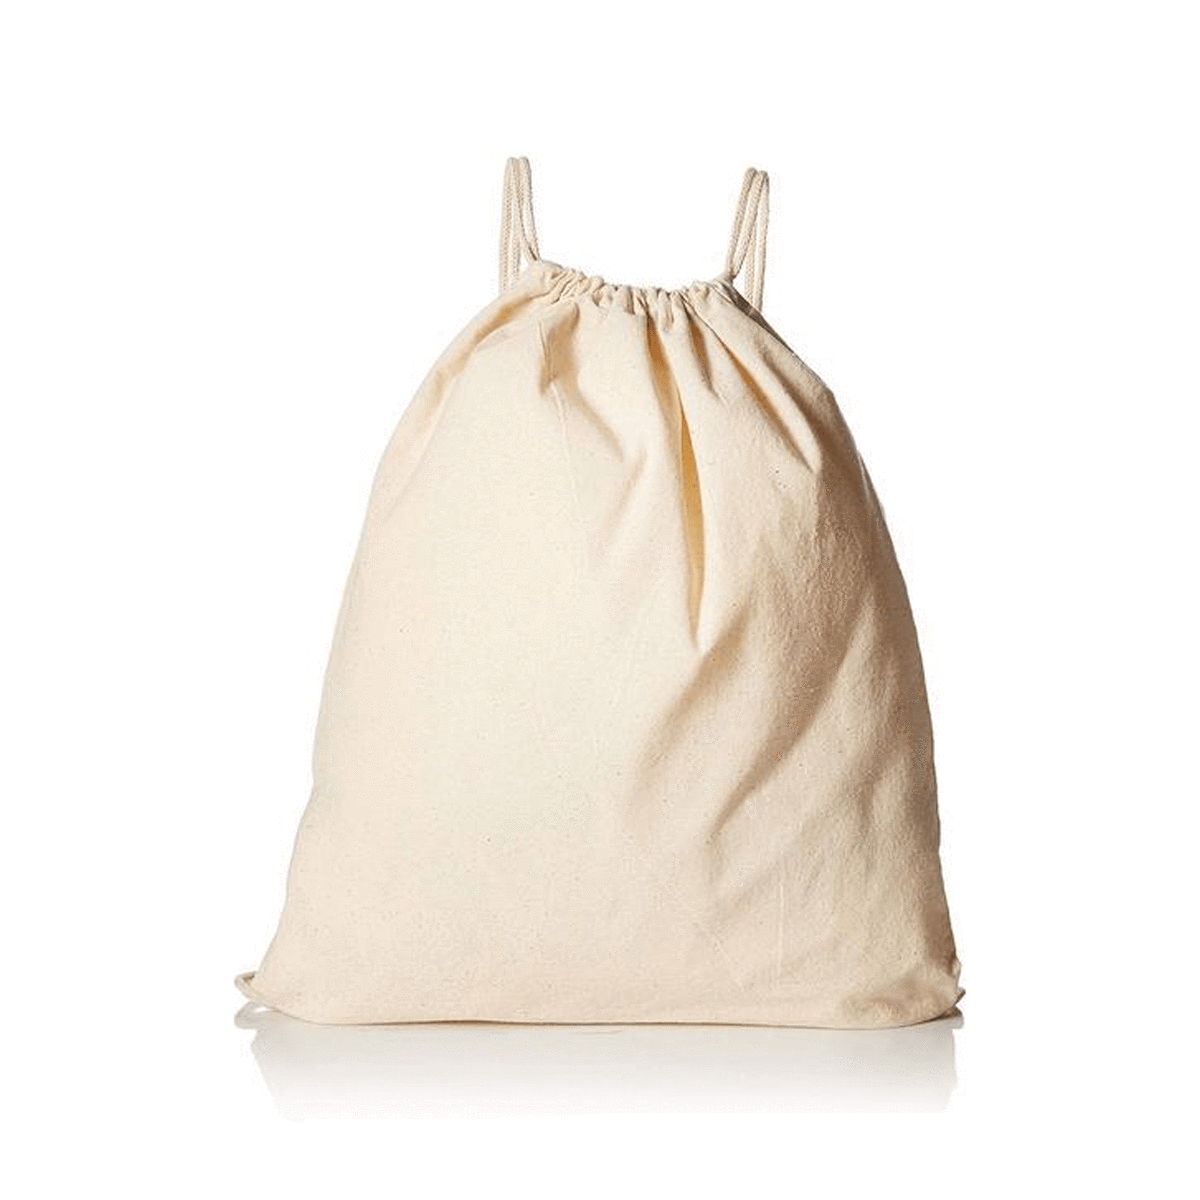 Durable Cotton Drawstring Tote Bags (Natural) - SquareDubai